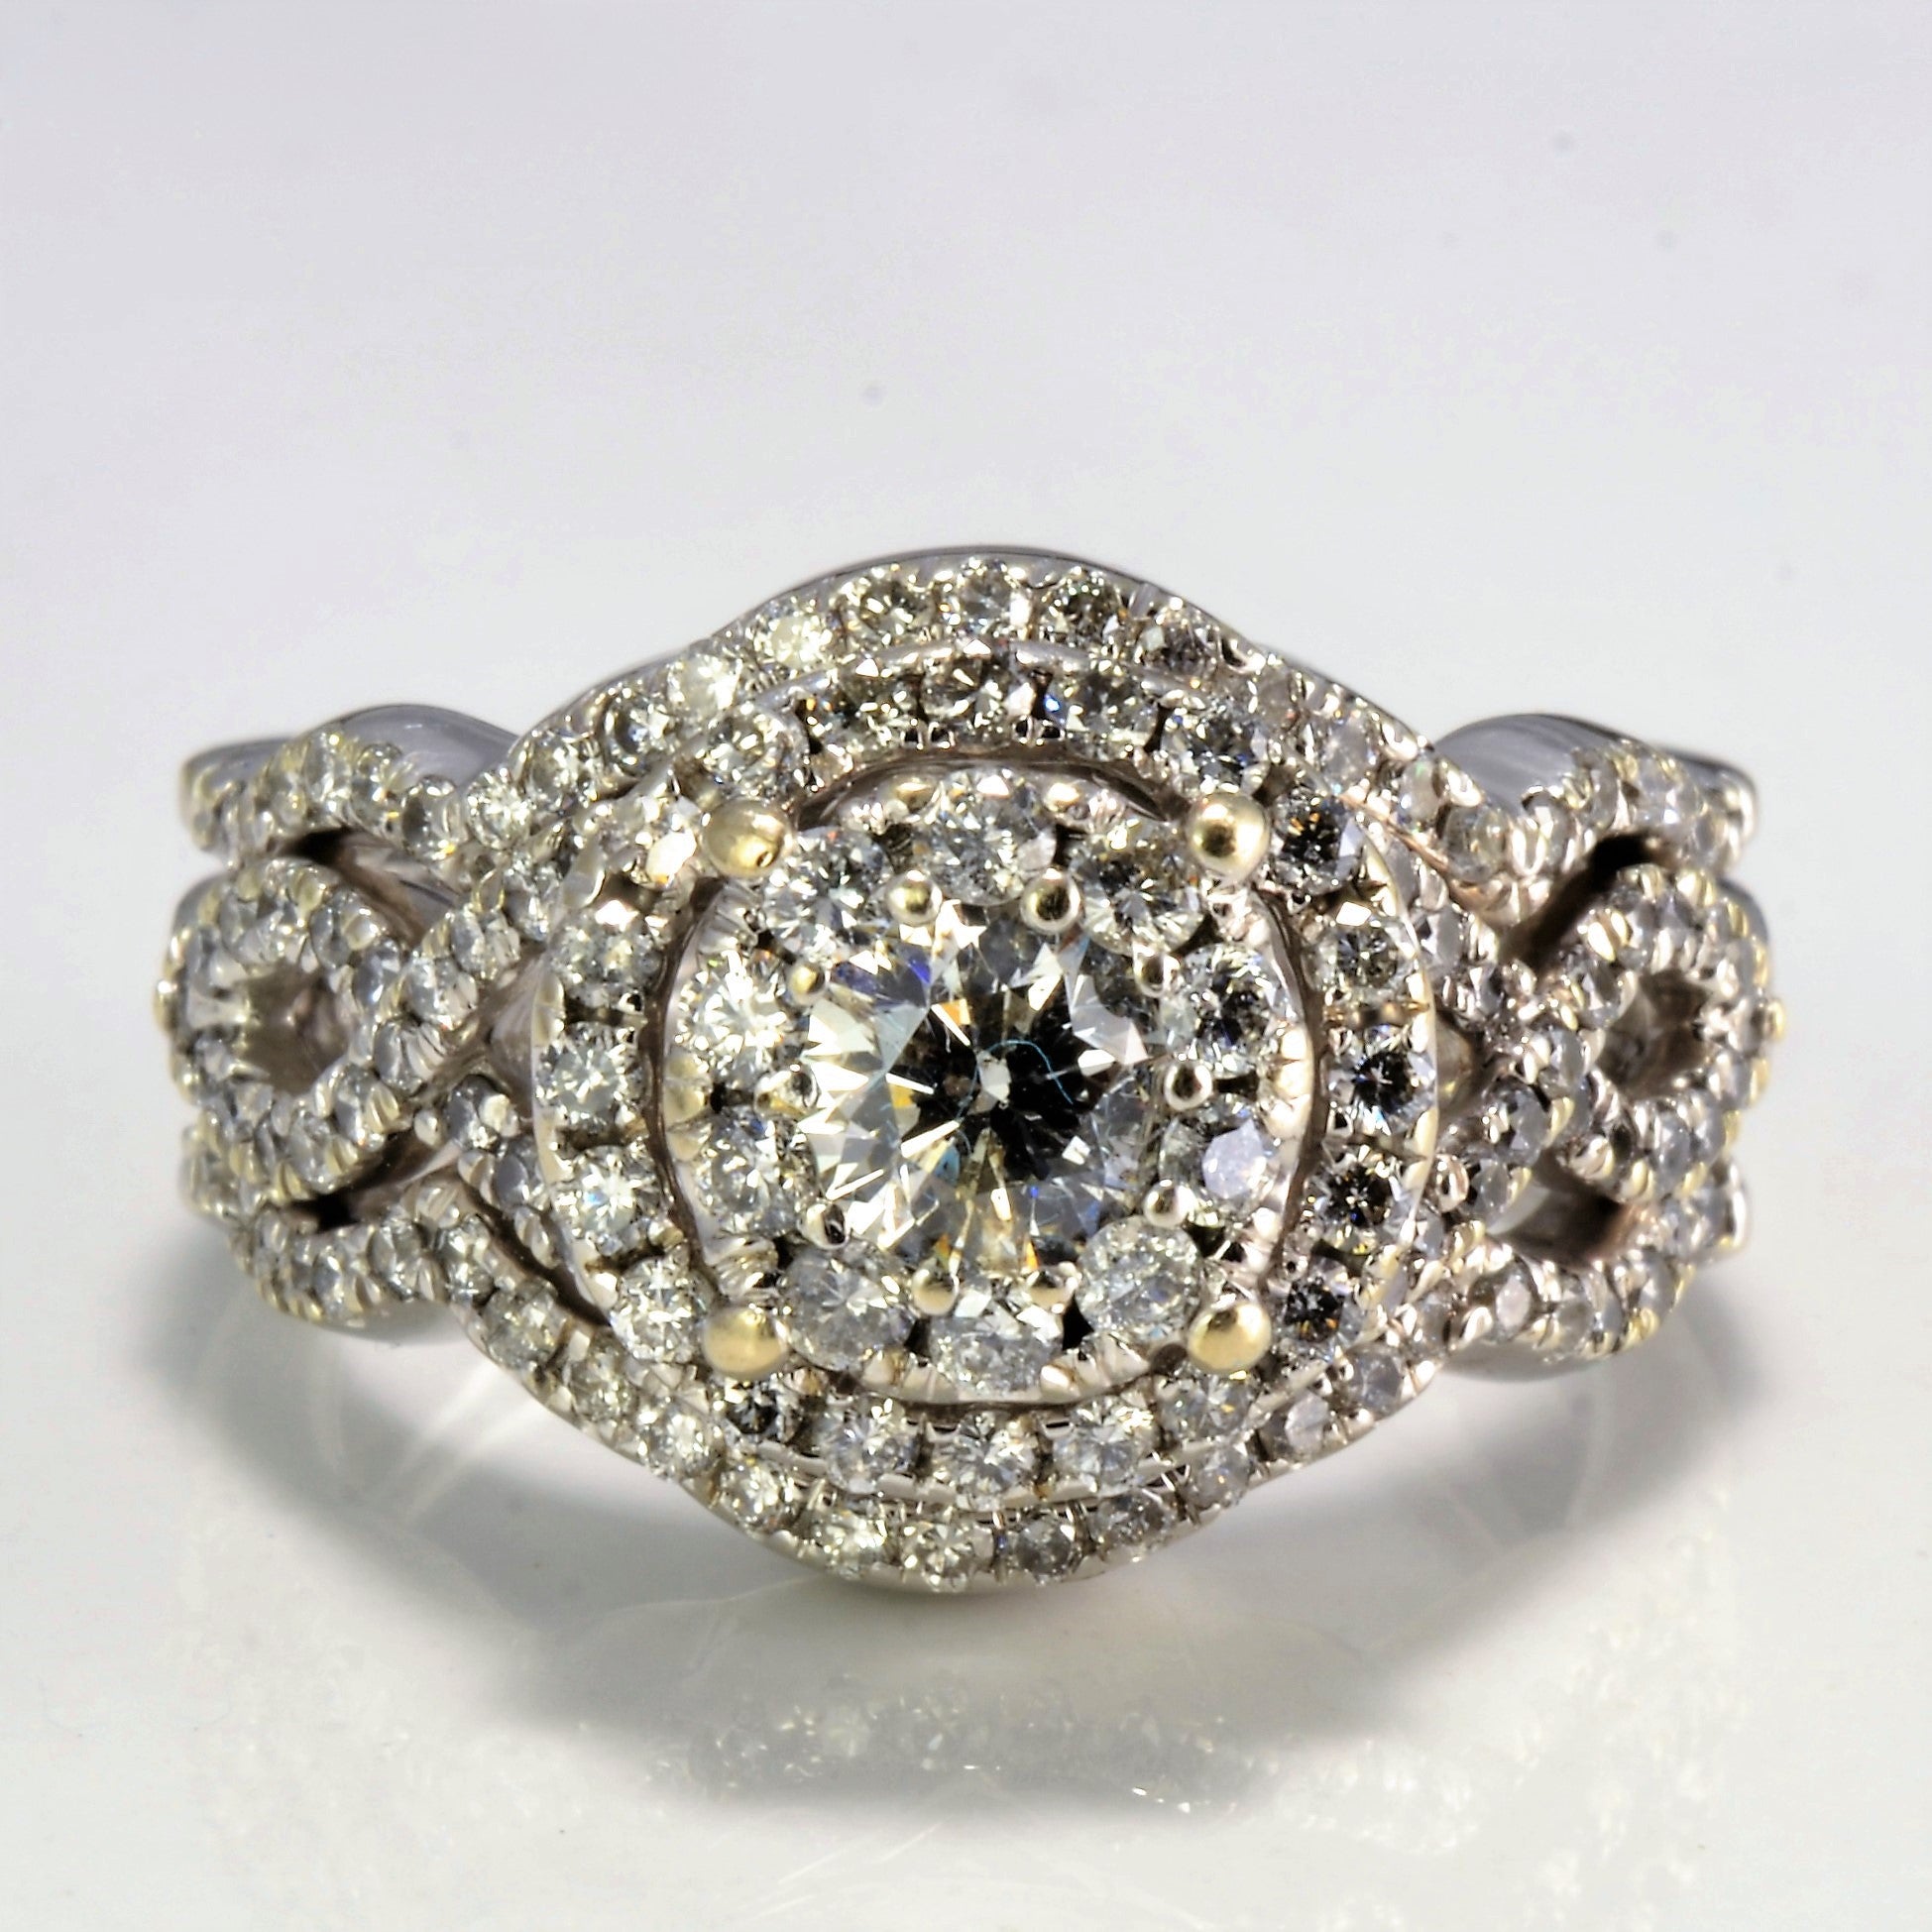 Soldered Halo Style Diamond Engagement Ring | 0.89 ctw, SZ 6 |